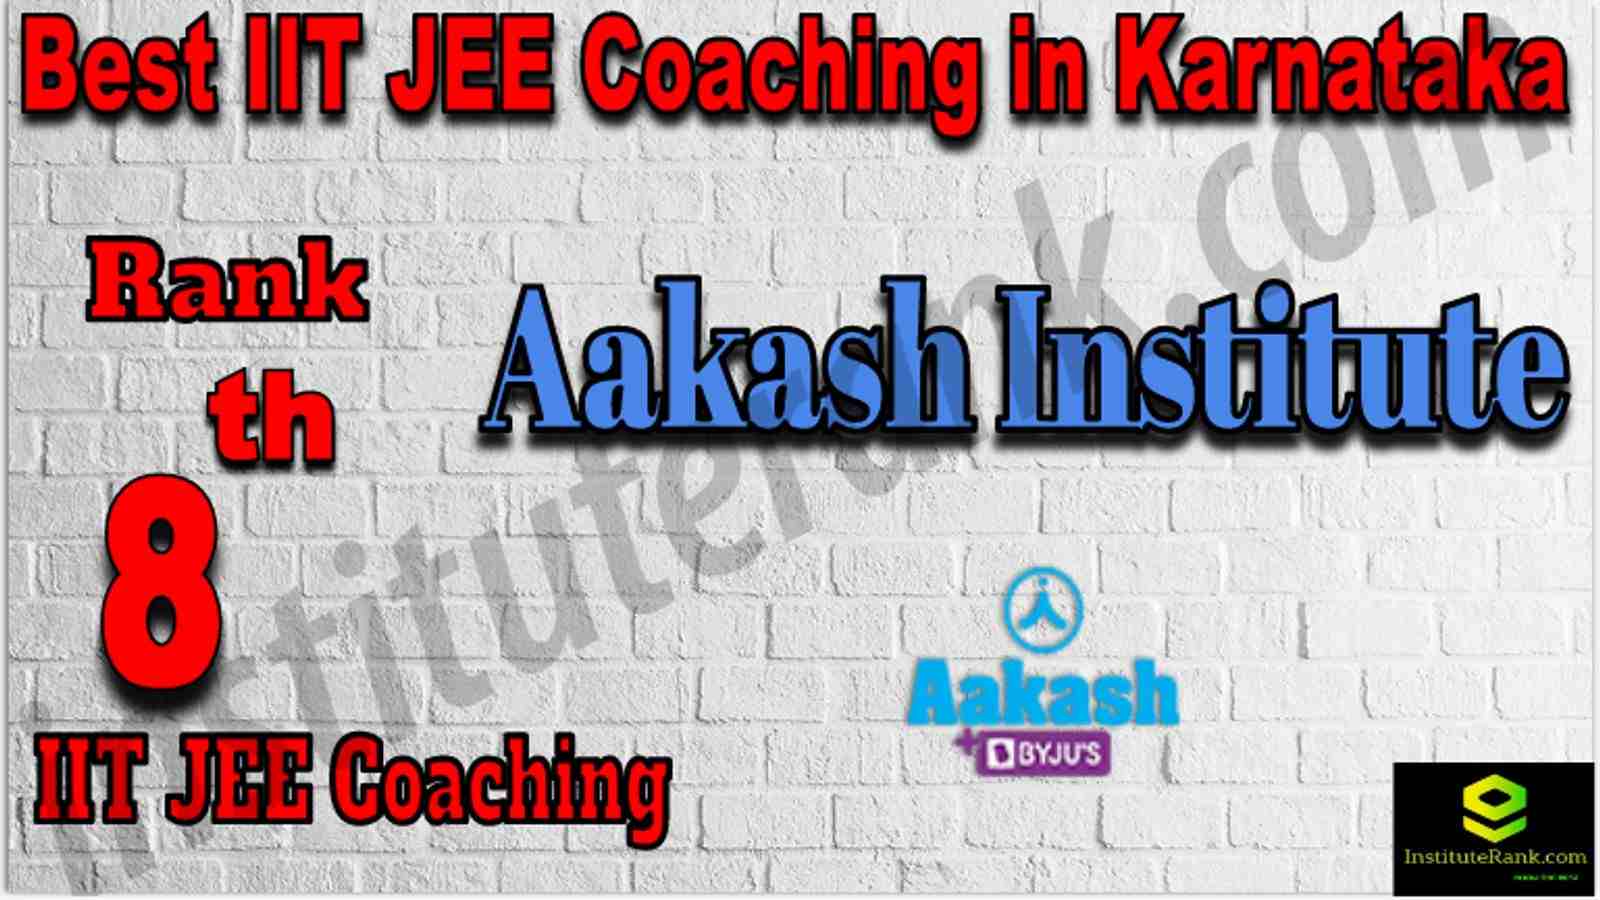 Rank 8th Best IIT JEE Coaching in Karnataka